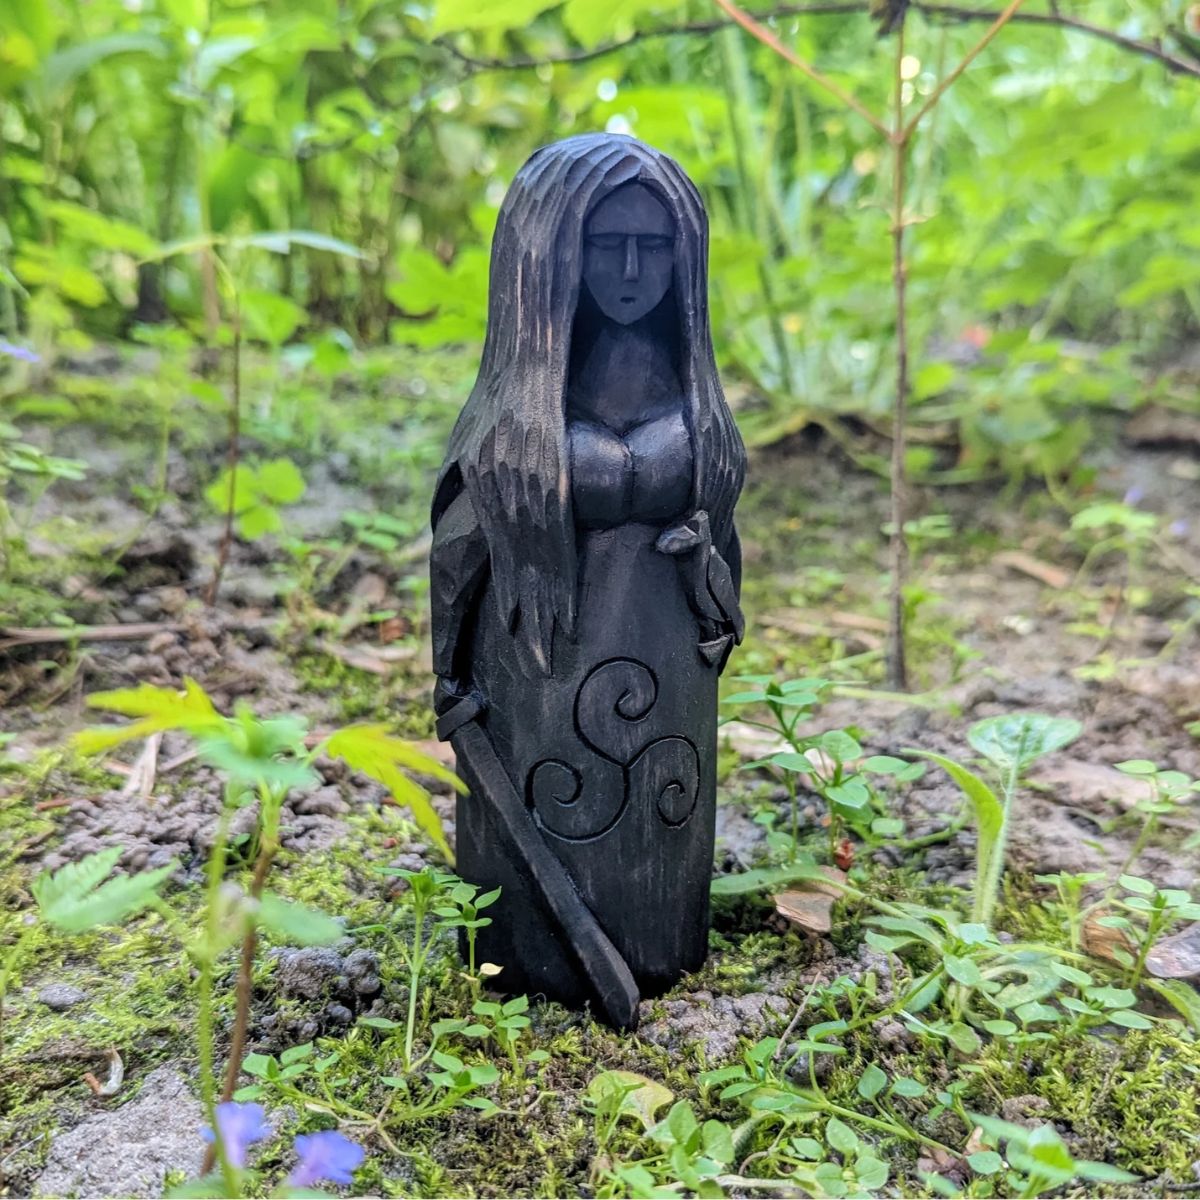 Morrigan goddess wooden figurine